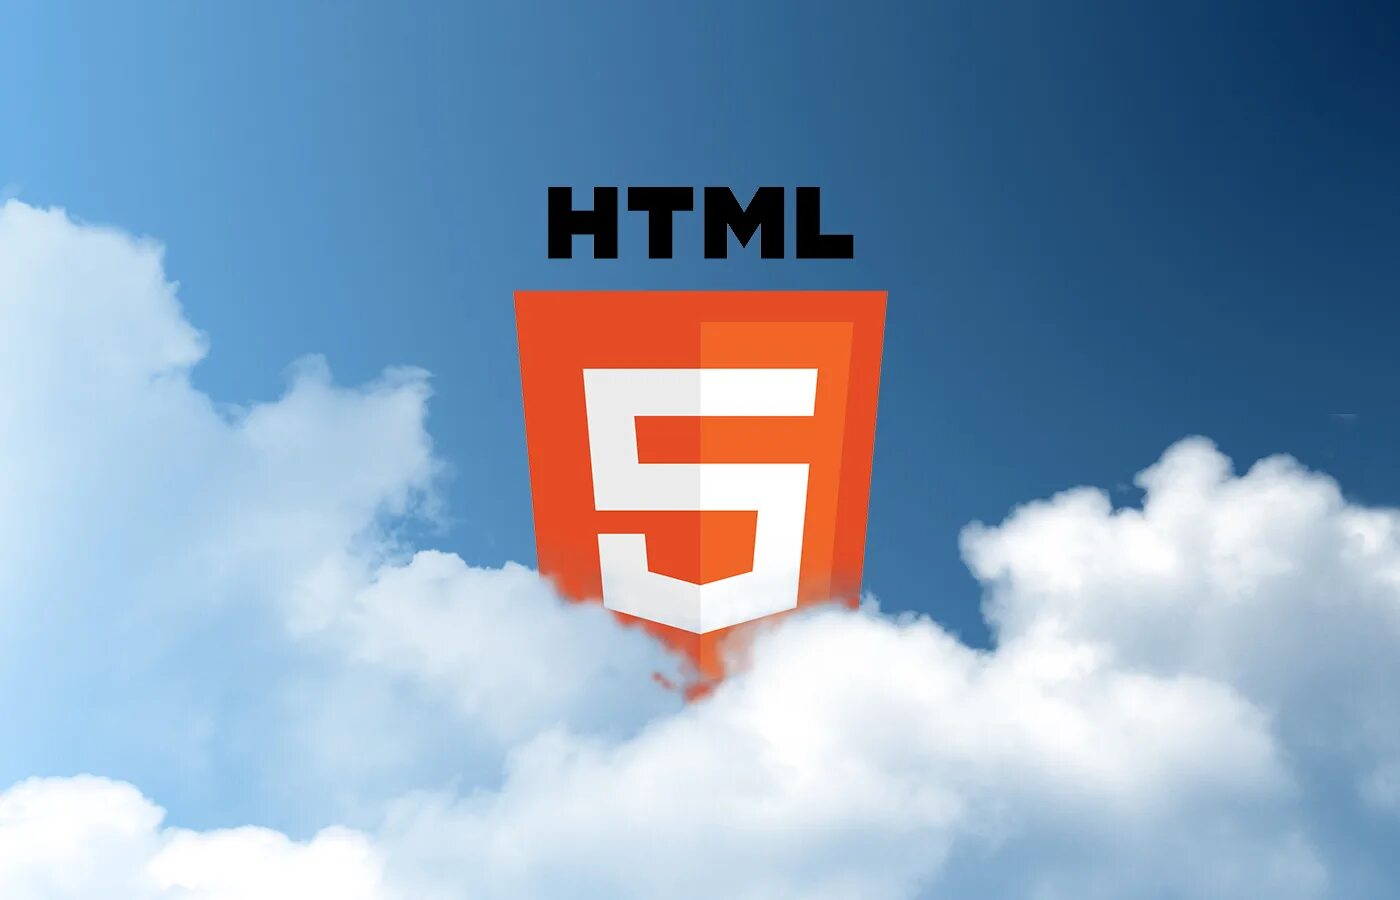 Html5 разработка. Html. Html5 лого. Картинка html. Значок html5.